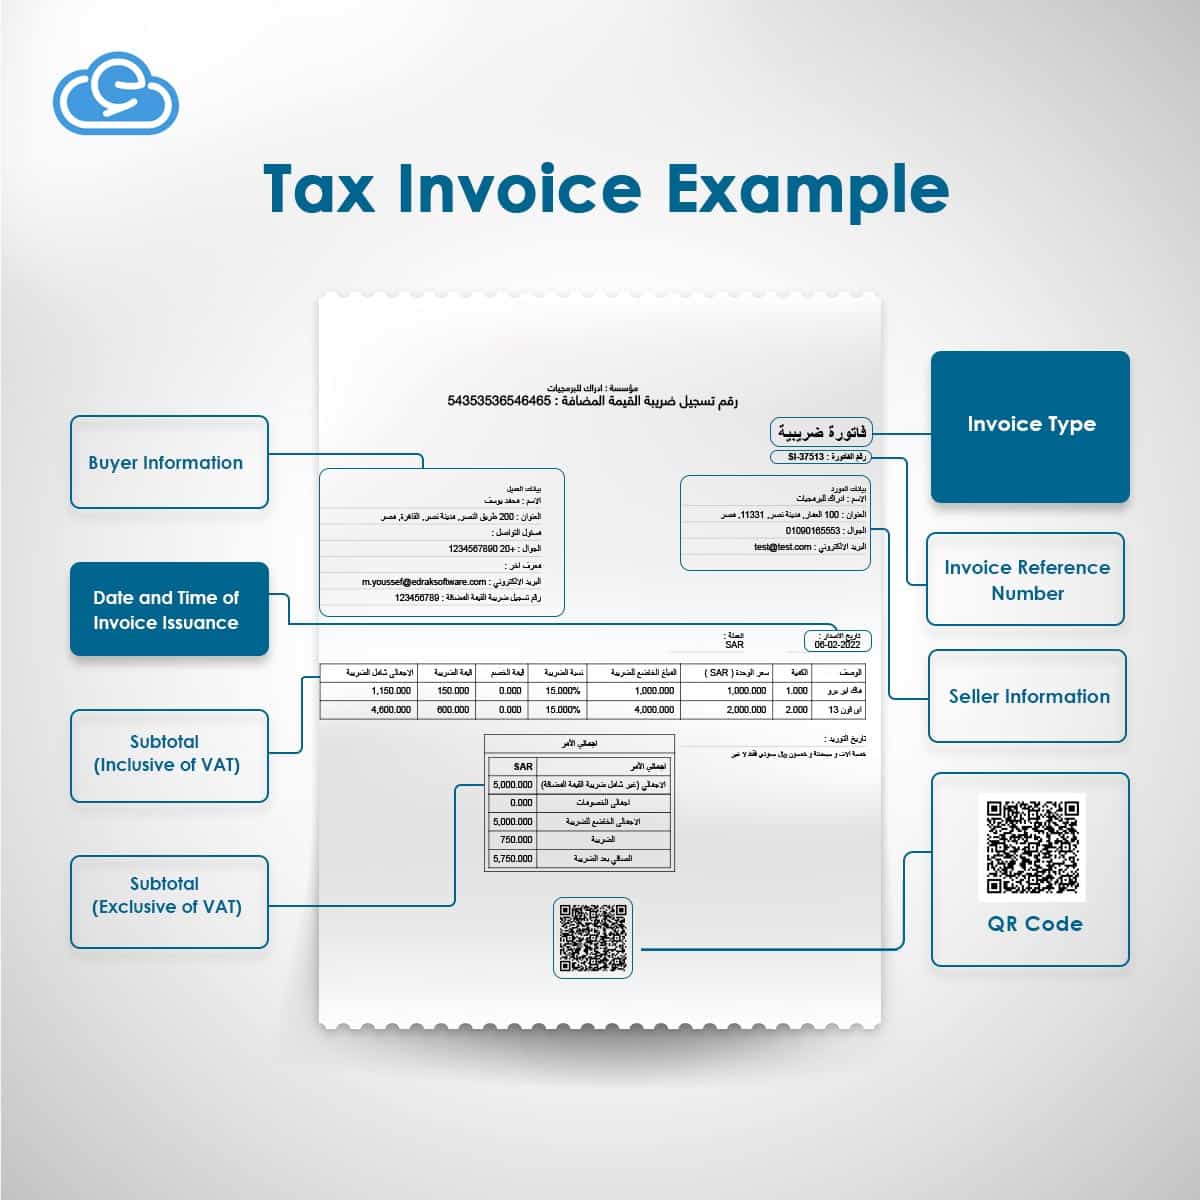 Tax Invoice Example